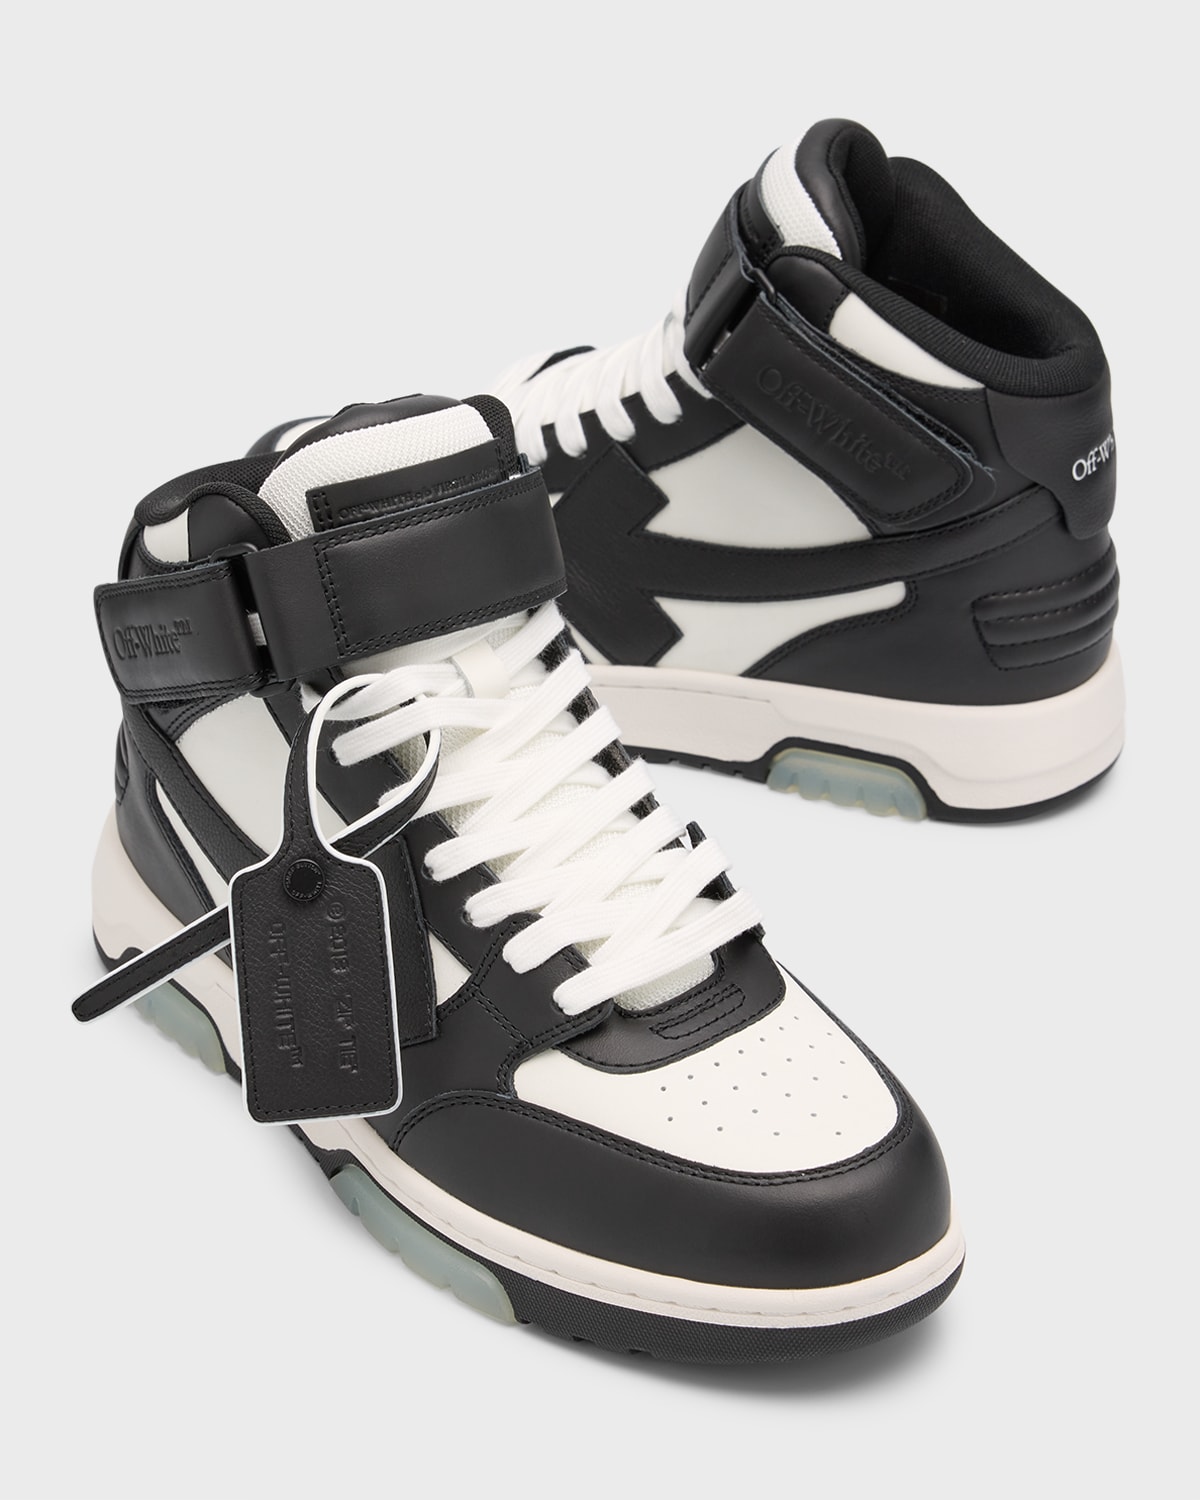 Louis Vuitton Skate Sneaker Mens 7 Worn Once $1,700